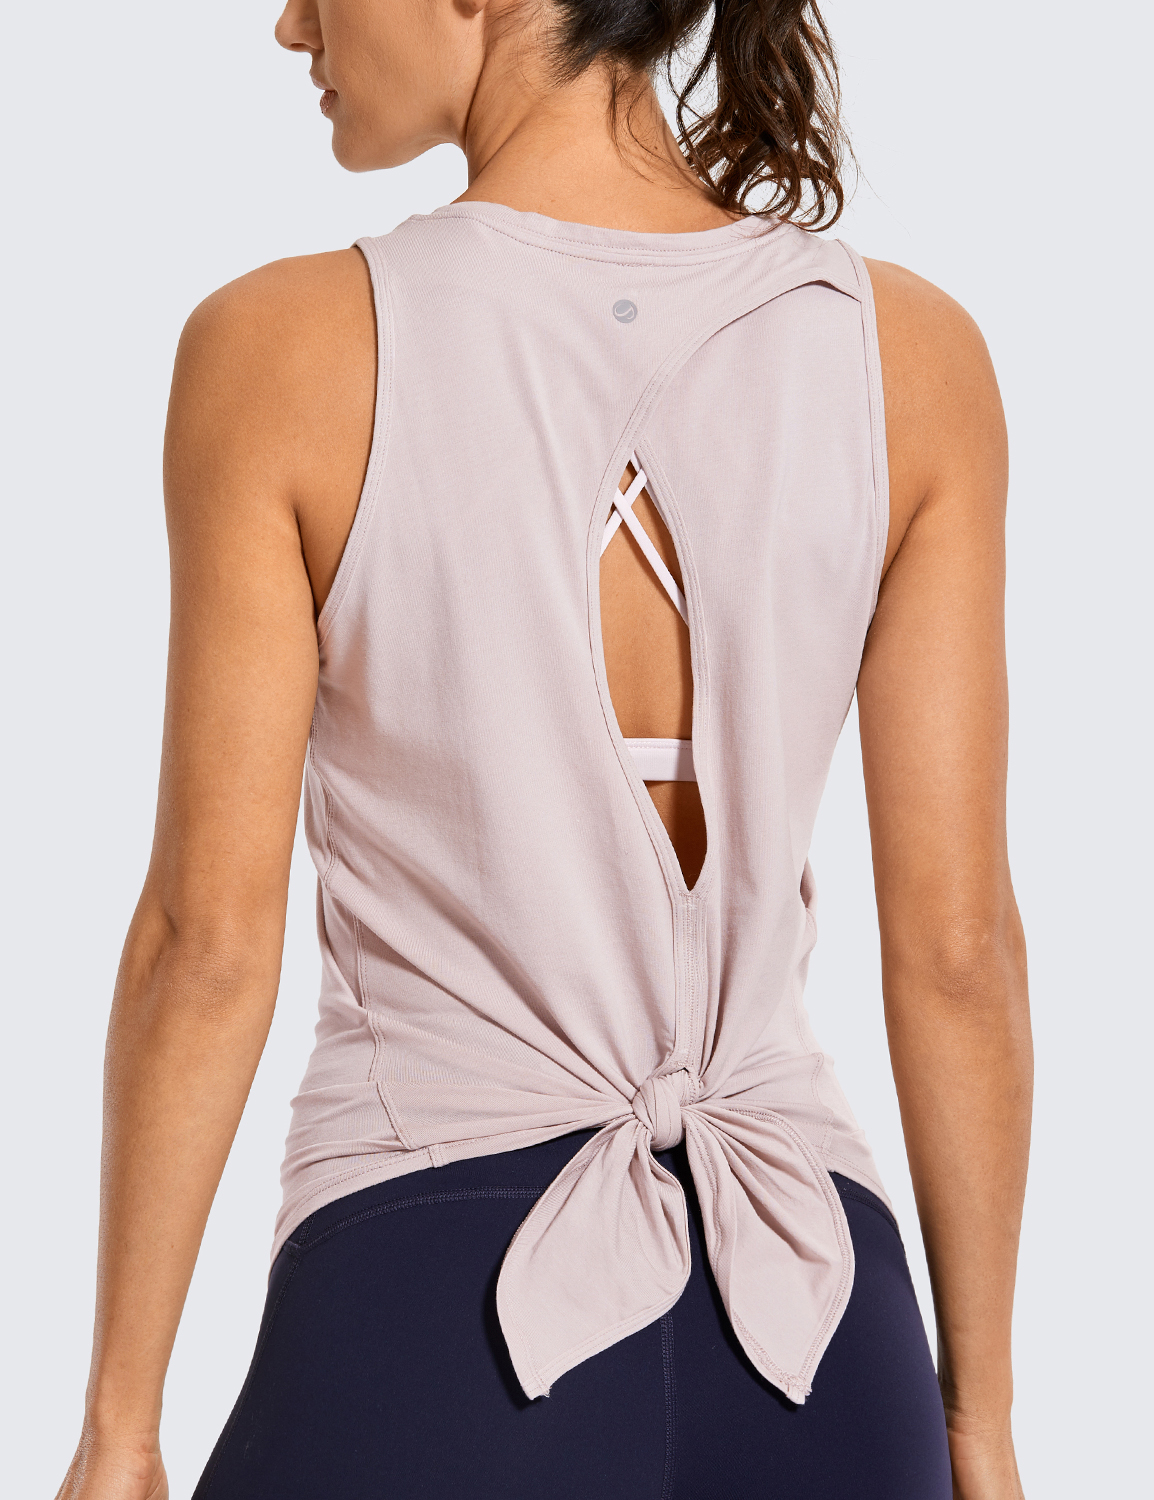 CRZ YOGA Women Pima Cotton Sleeveless Shirts Yoga Vest Open Back Sport ...